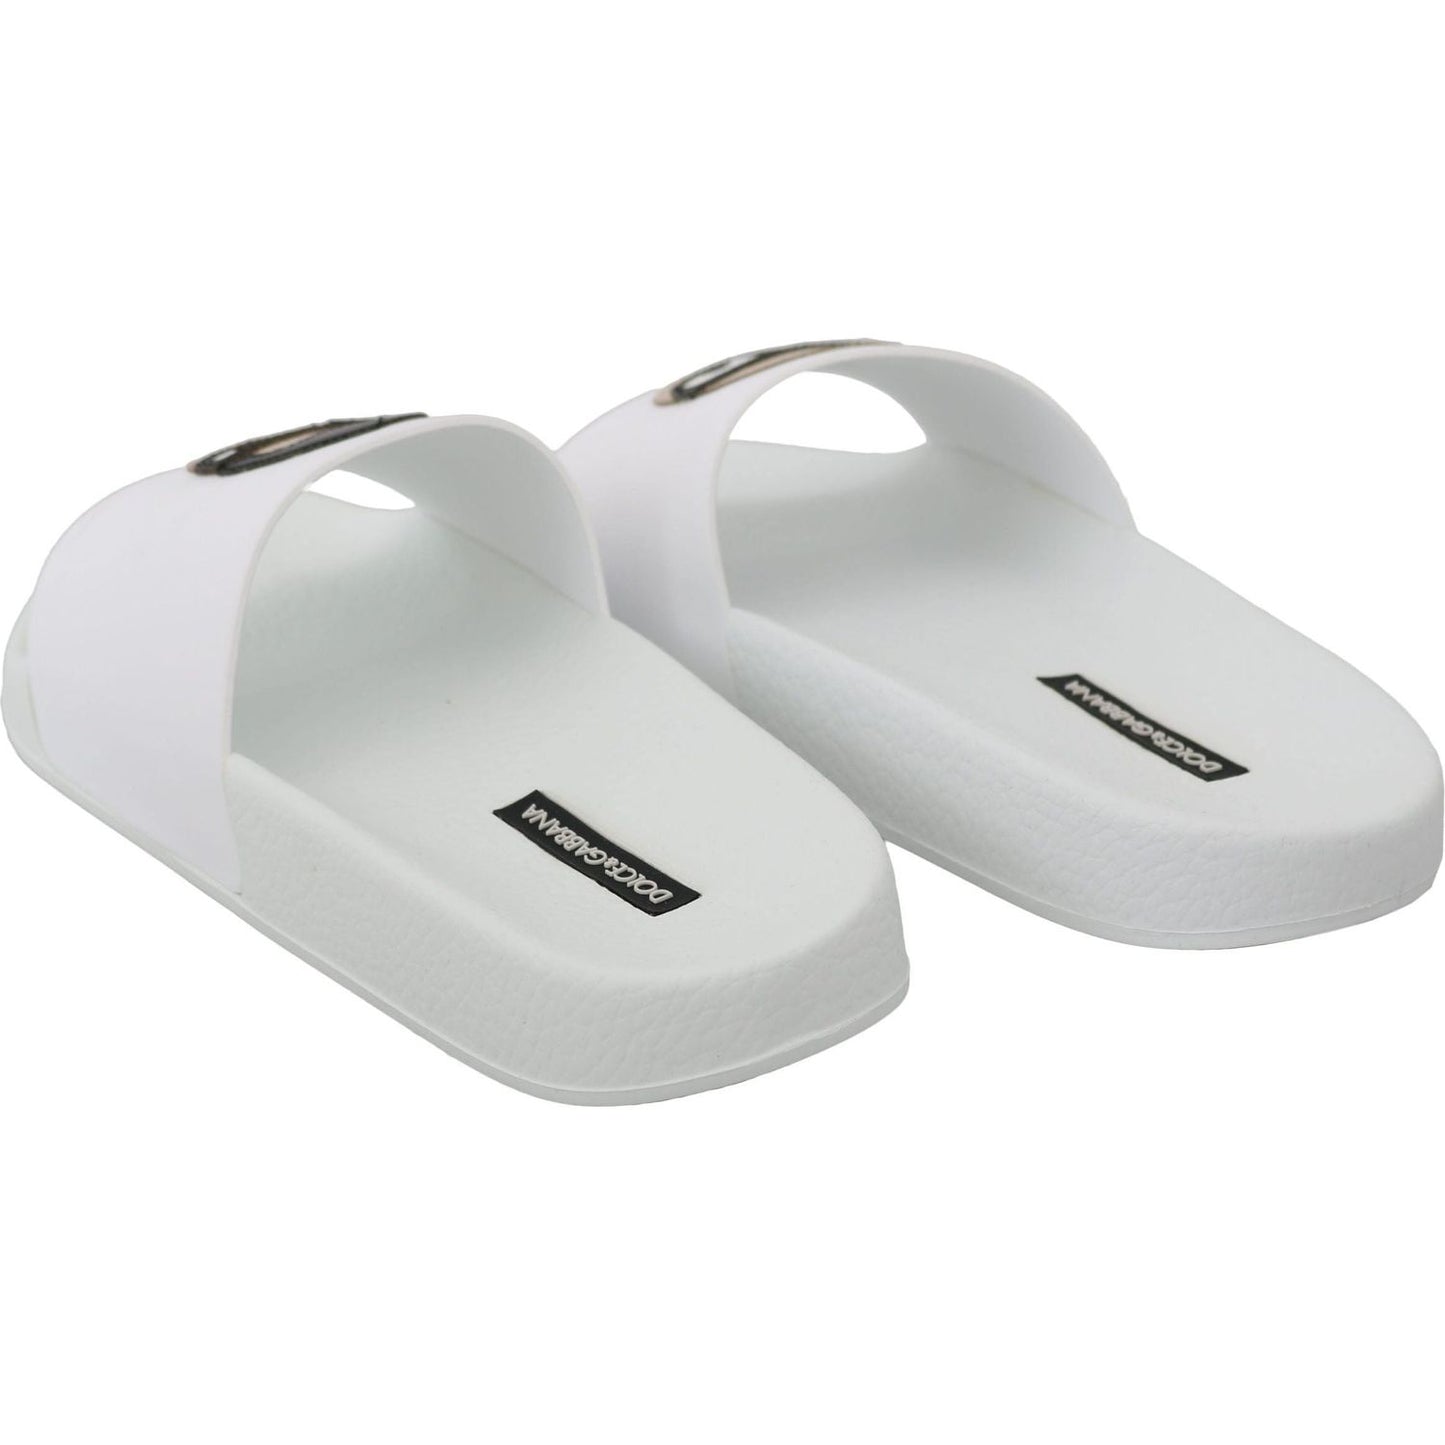 Dolce & Gabbana Chic White Slide Sandals - Luxury Summer Footwear white-leather-dgfamily-slides-shoes-sandals